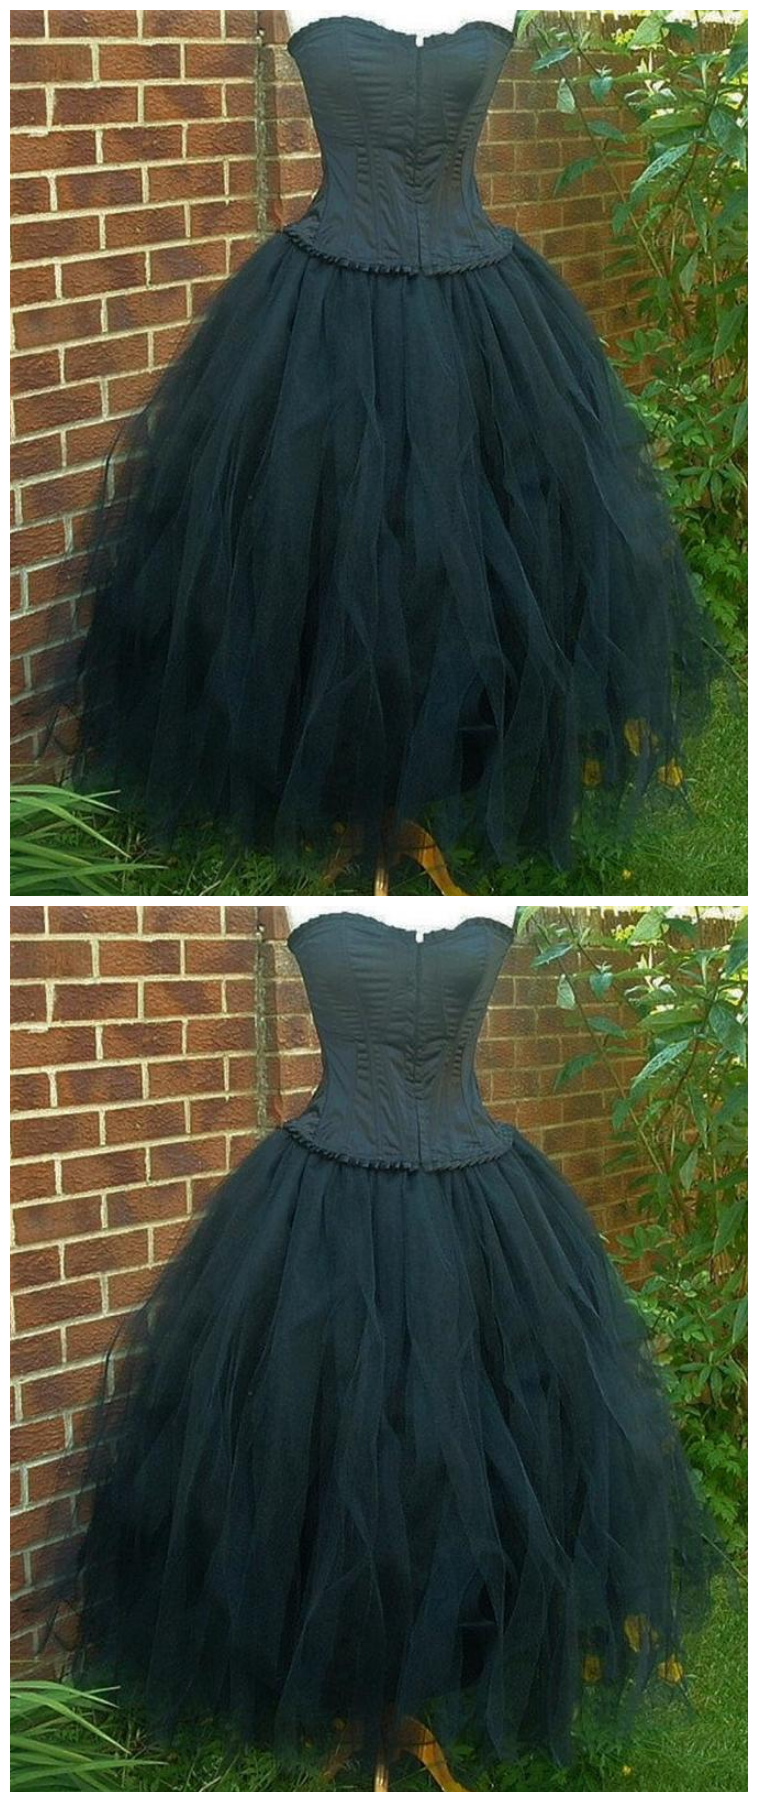 Tulle Goth Steampunk Bridesmaid Alternative Clothing Wedding Dress